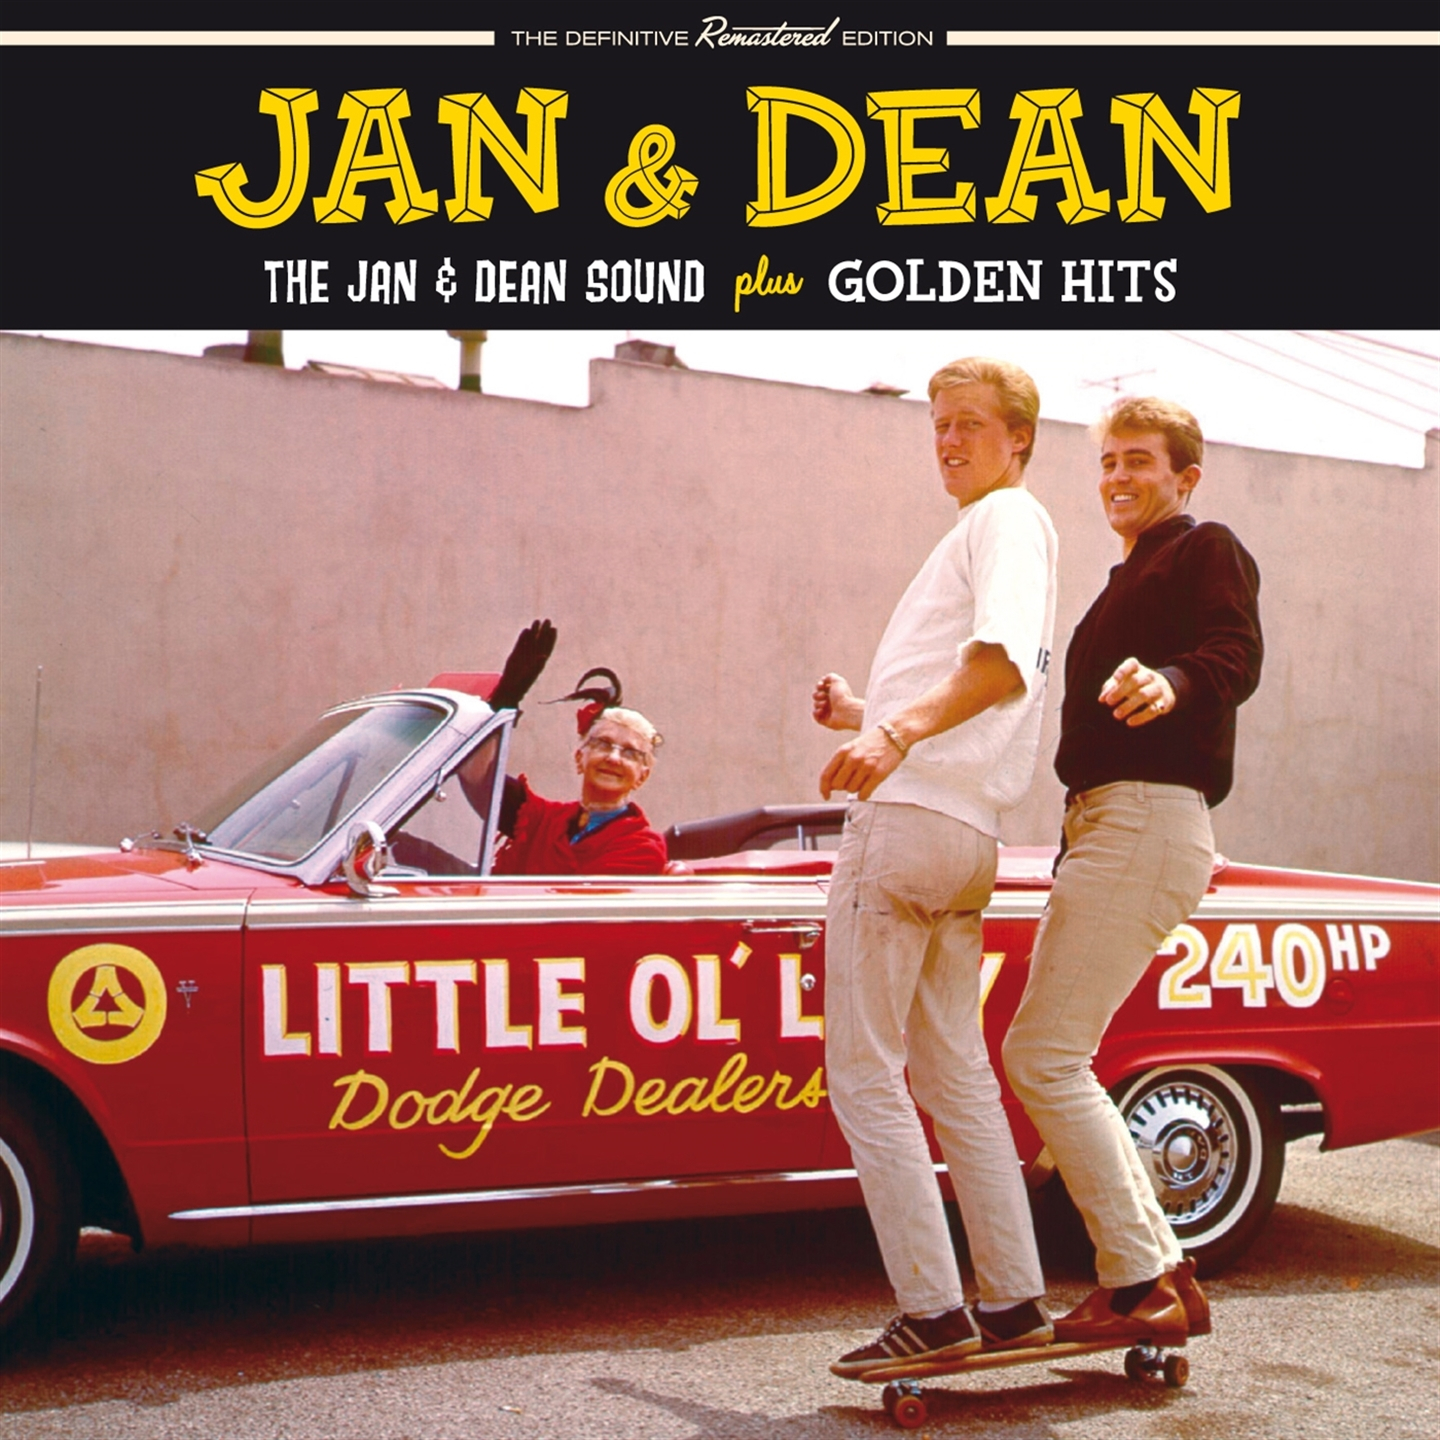 THE JEAN & DEAN SOUND (+ GOLDEN HITS)